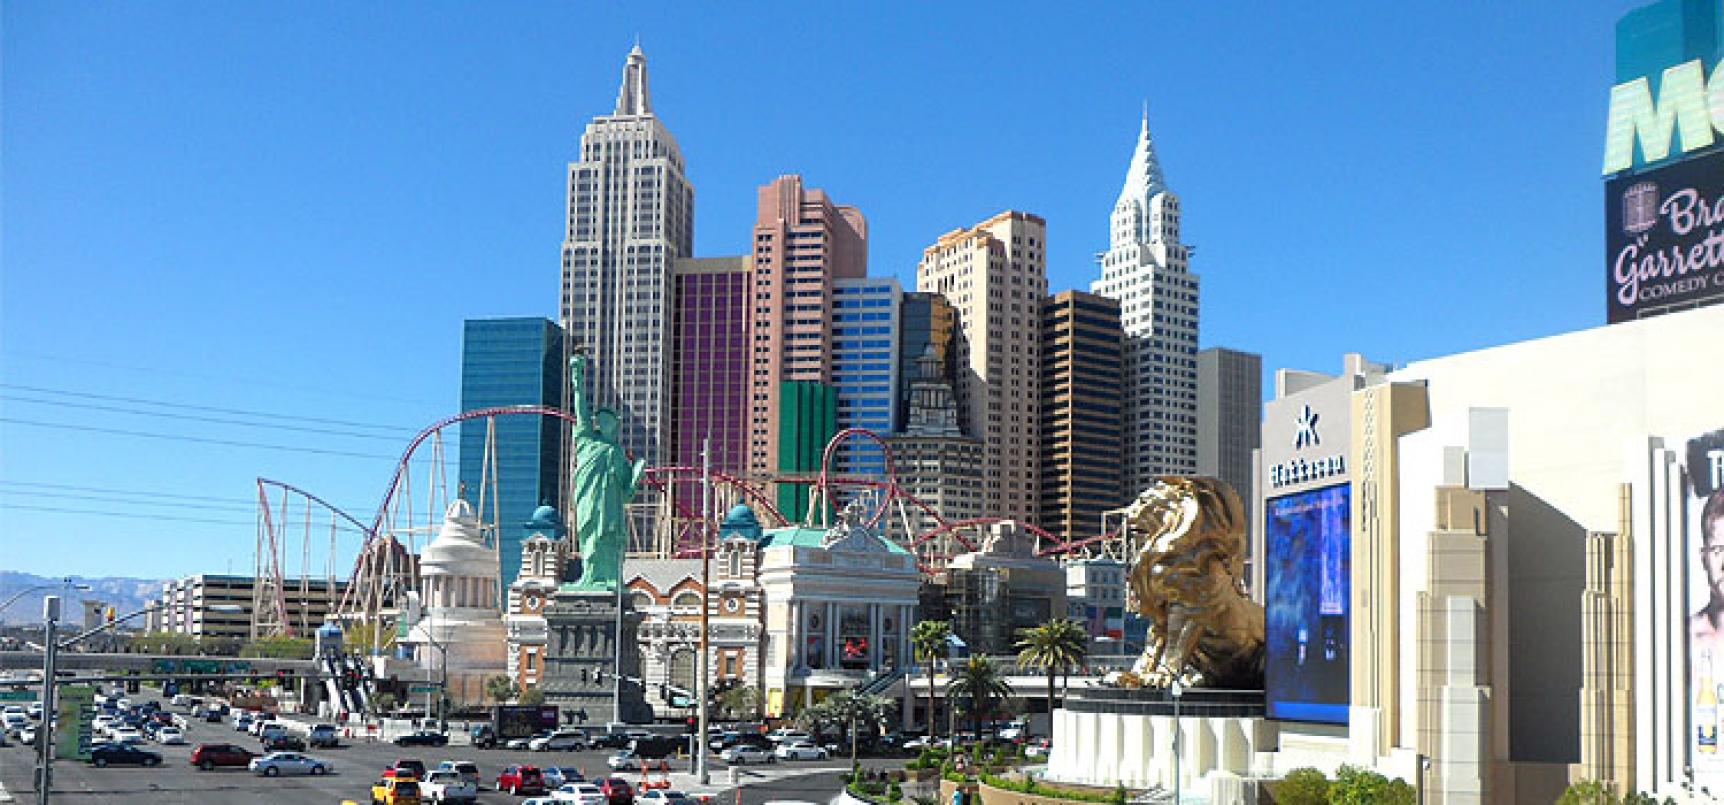 New York New York Hotel & Casino Las Vegas